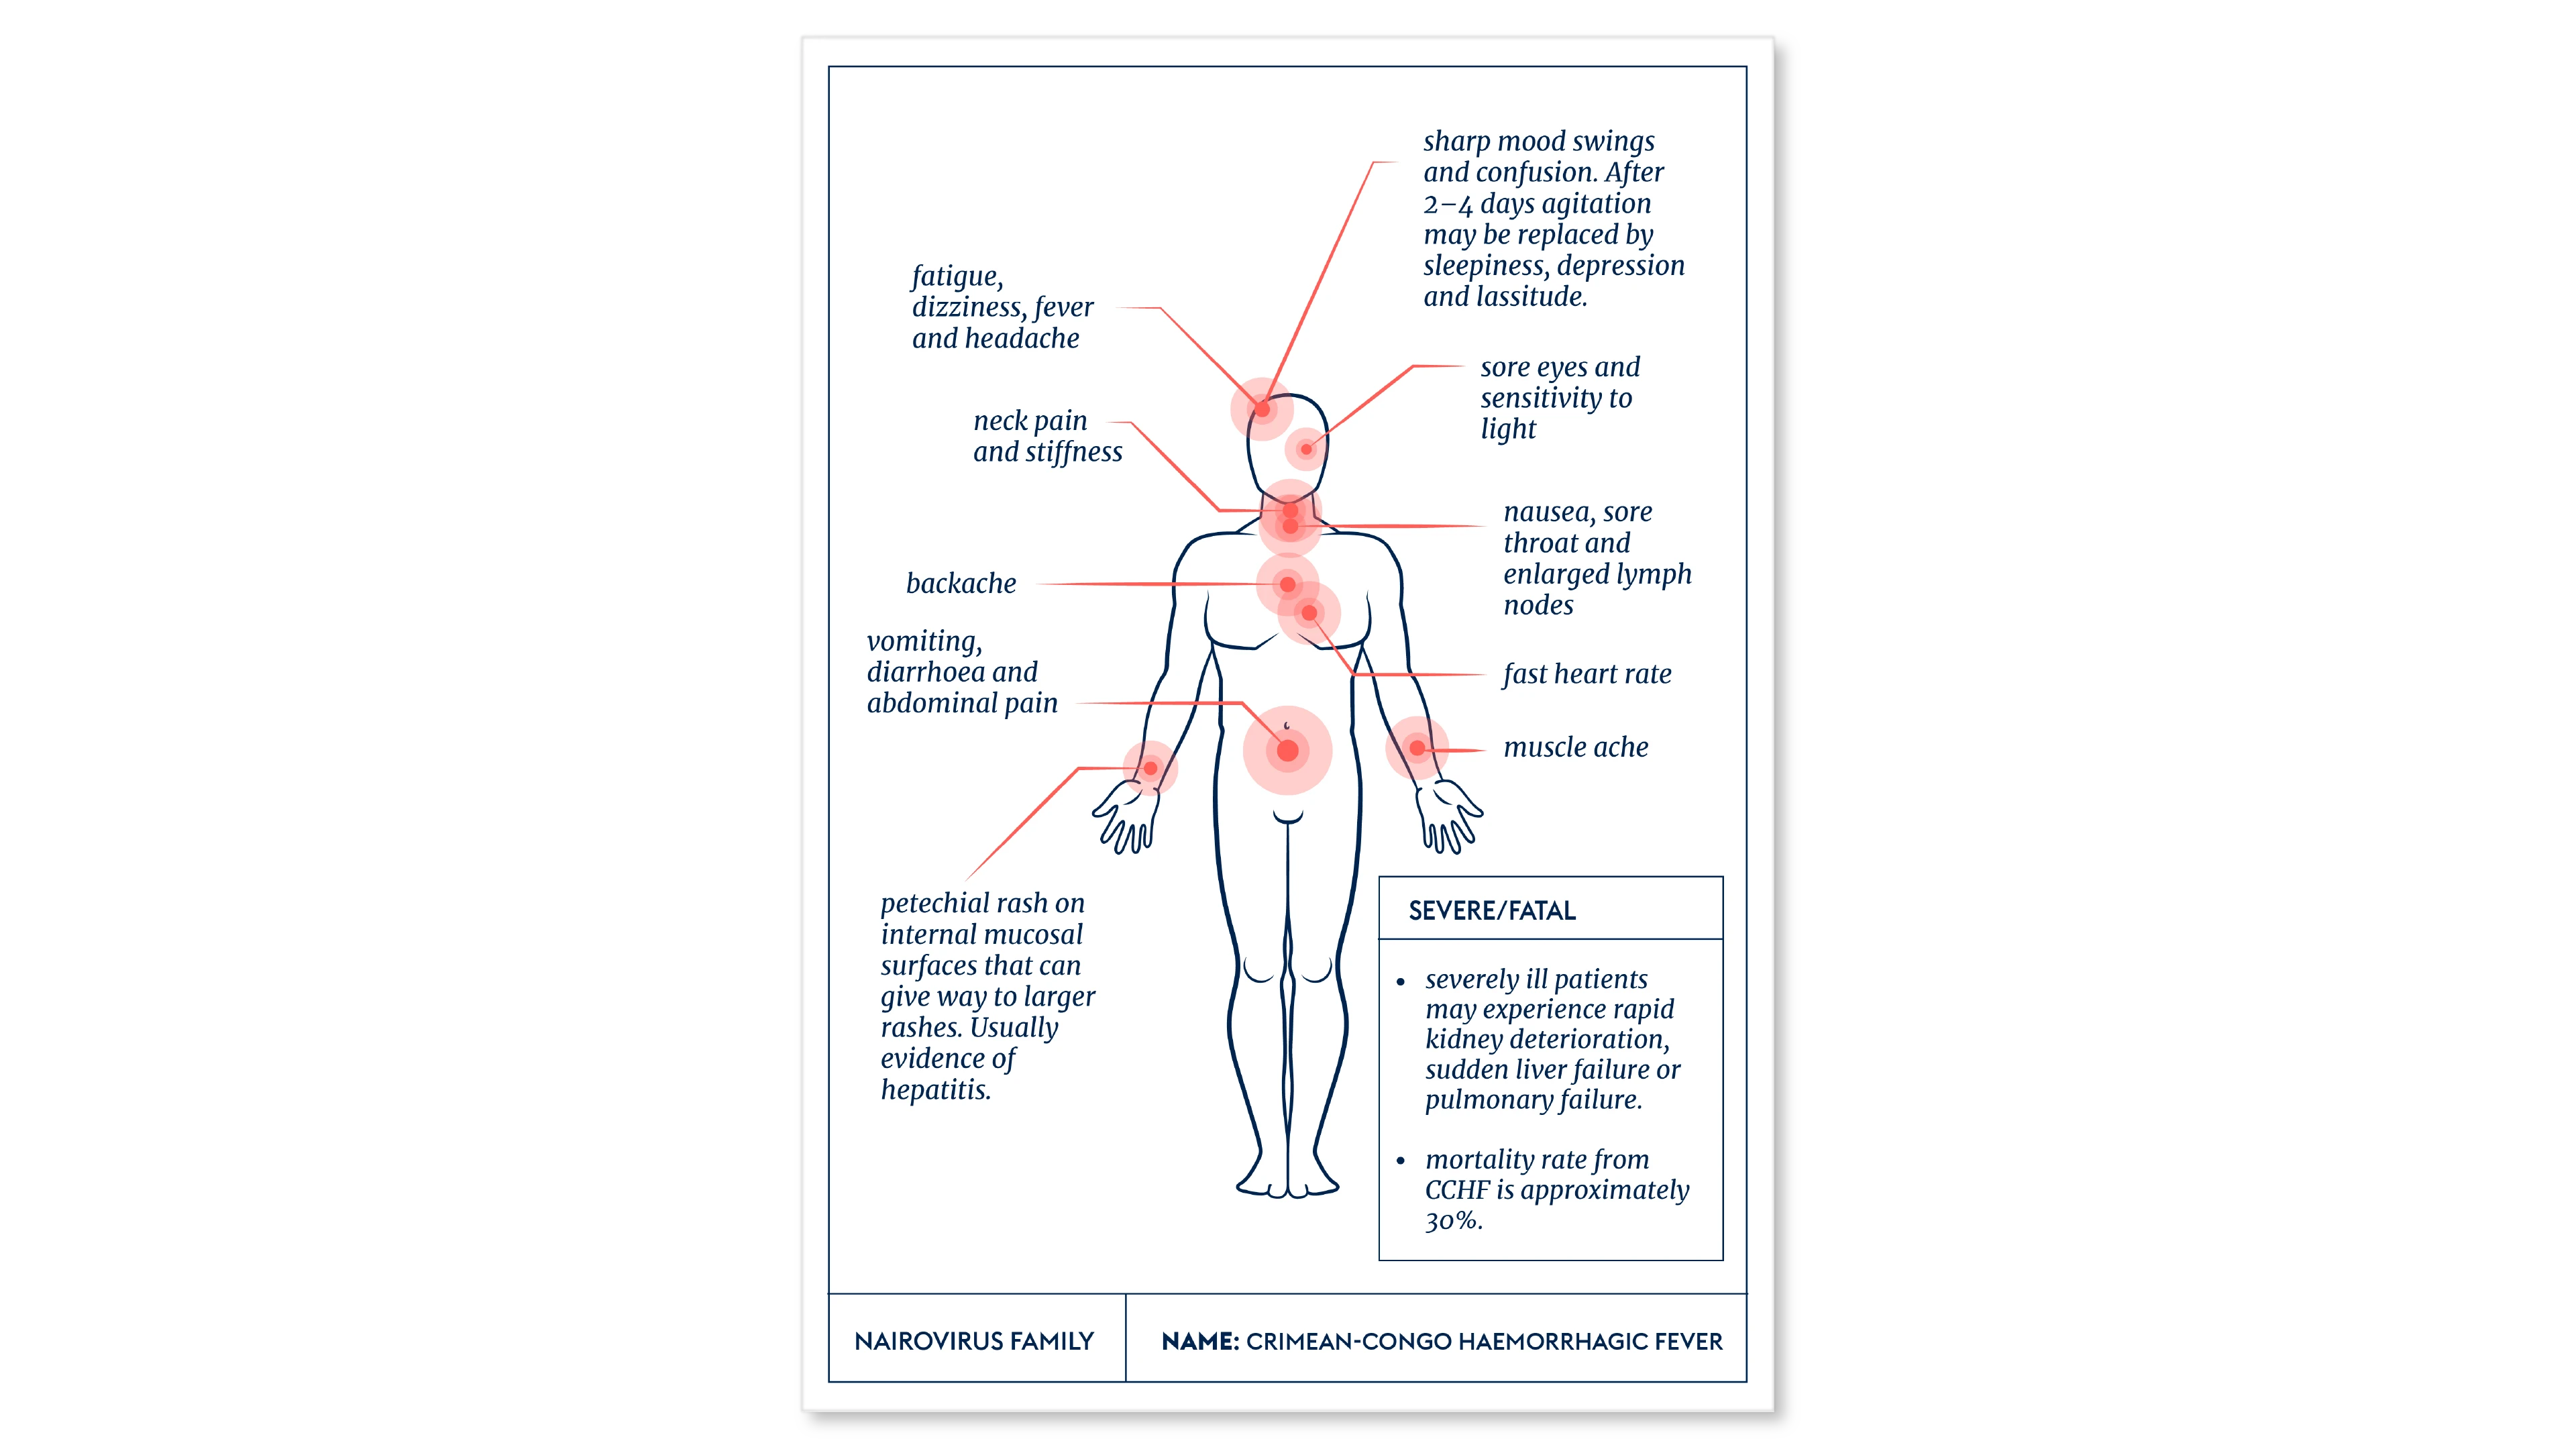 illustration showing symptoms of CCHF